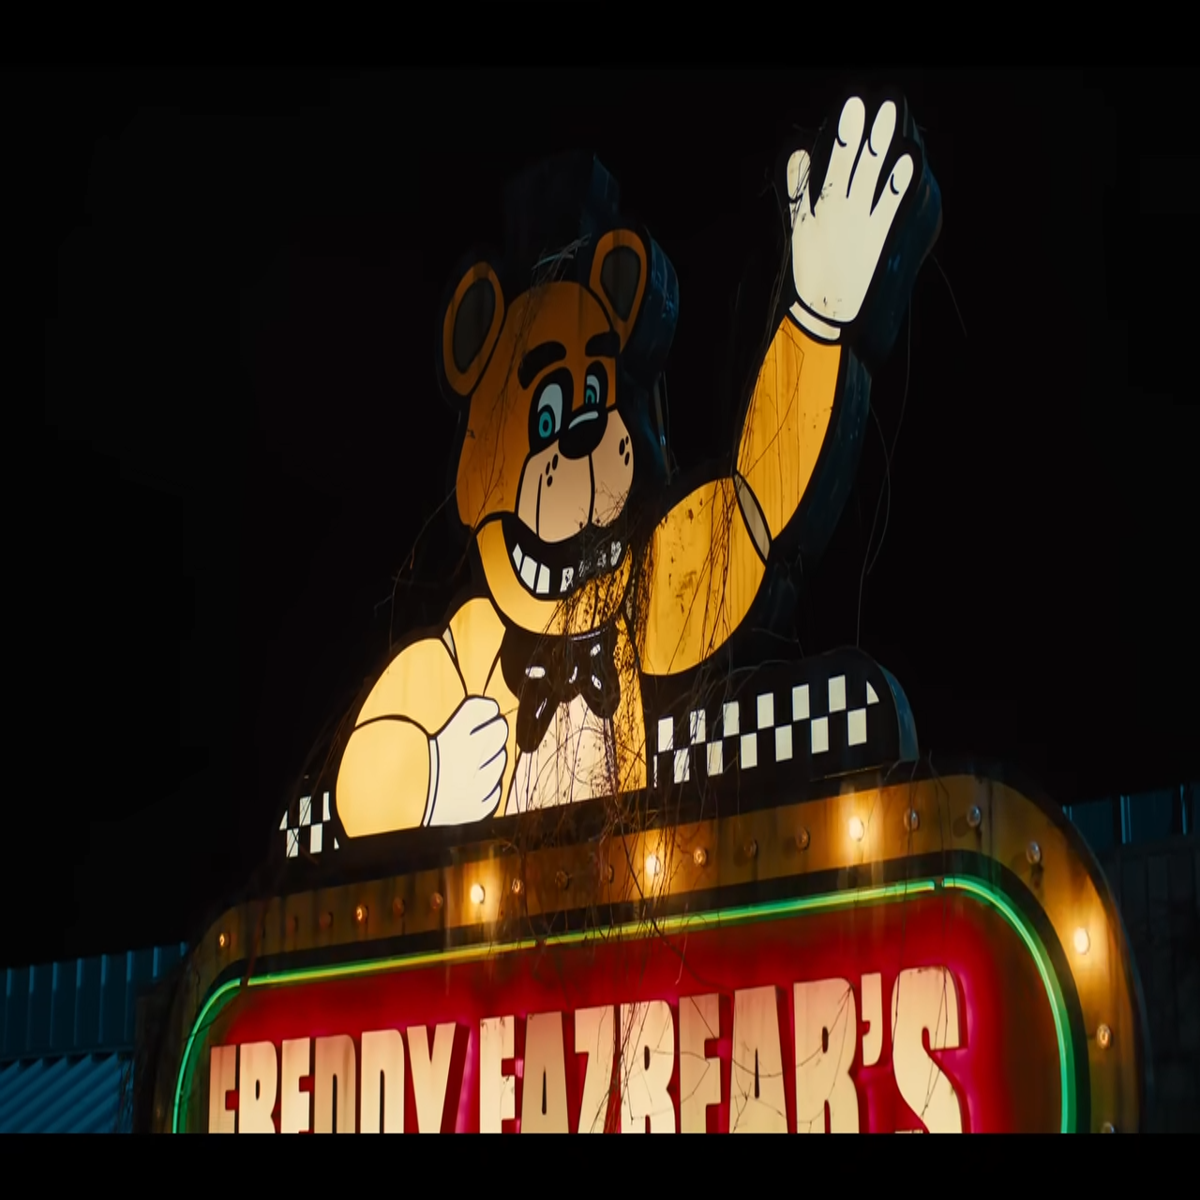 Scott Cawthon Announces Five Nights at Freddy's Movie Has a Script